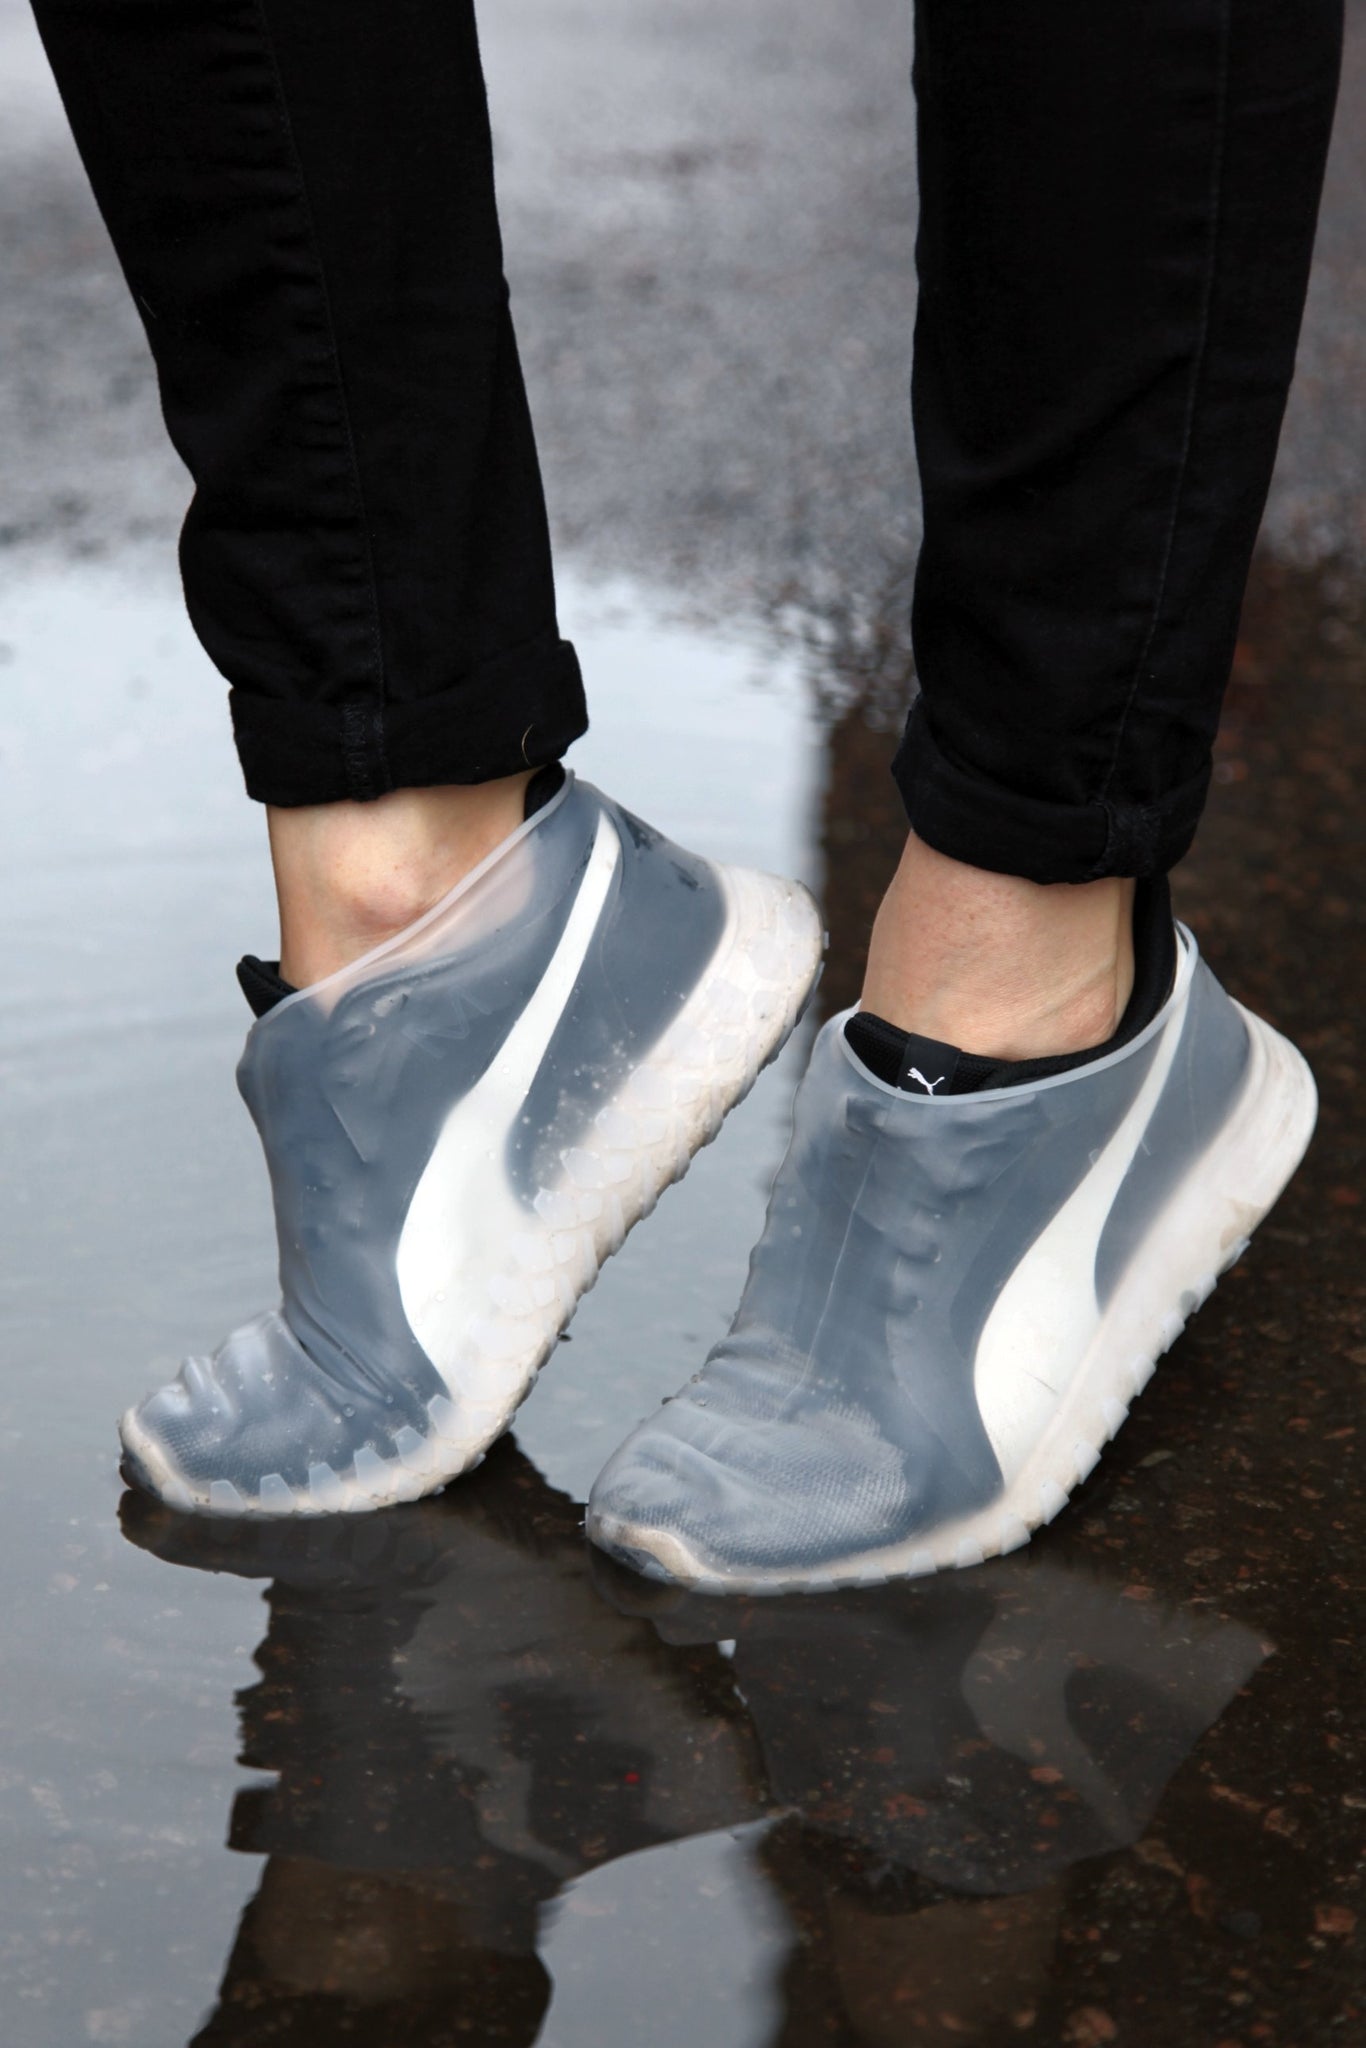 Waterproof shoe covers